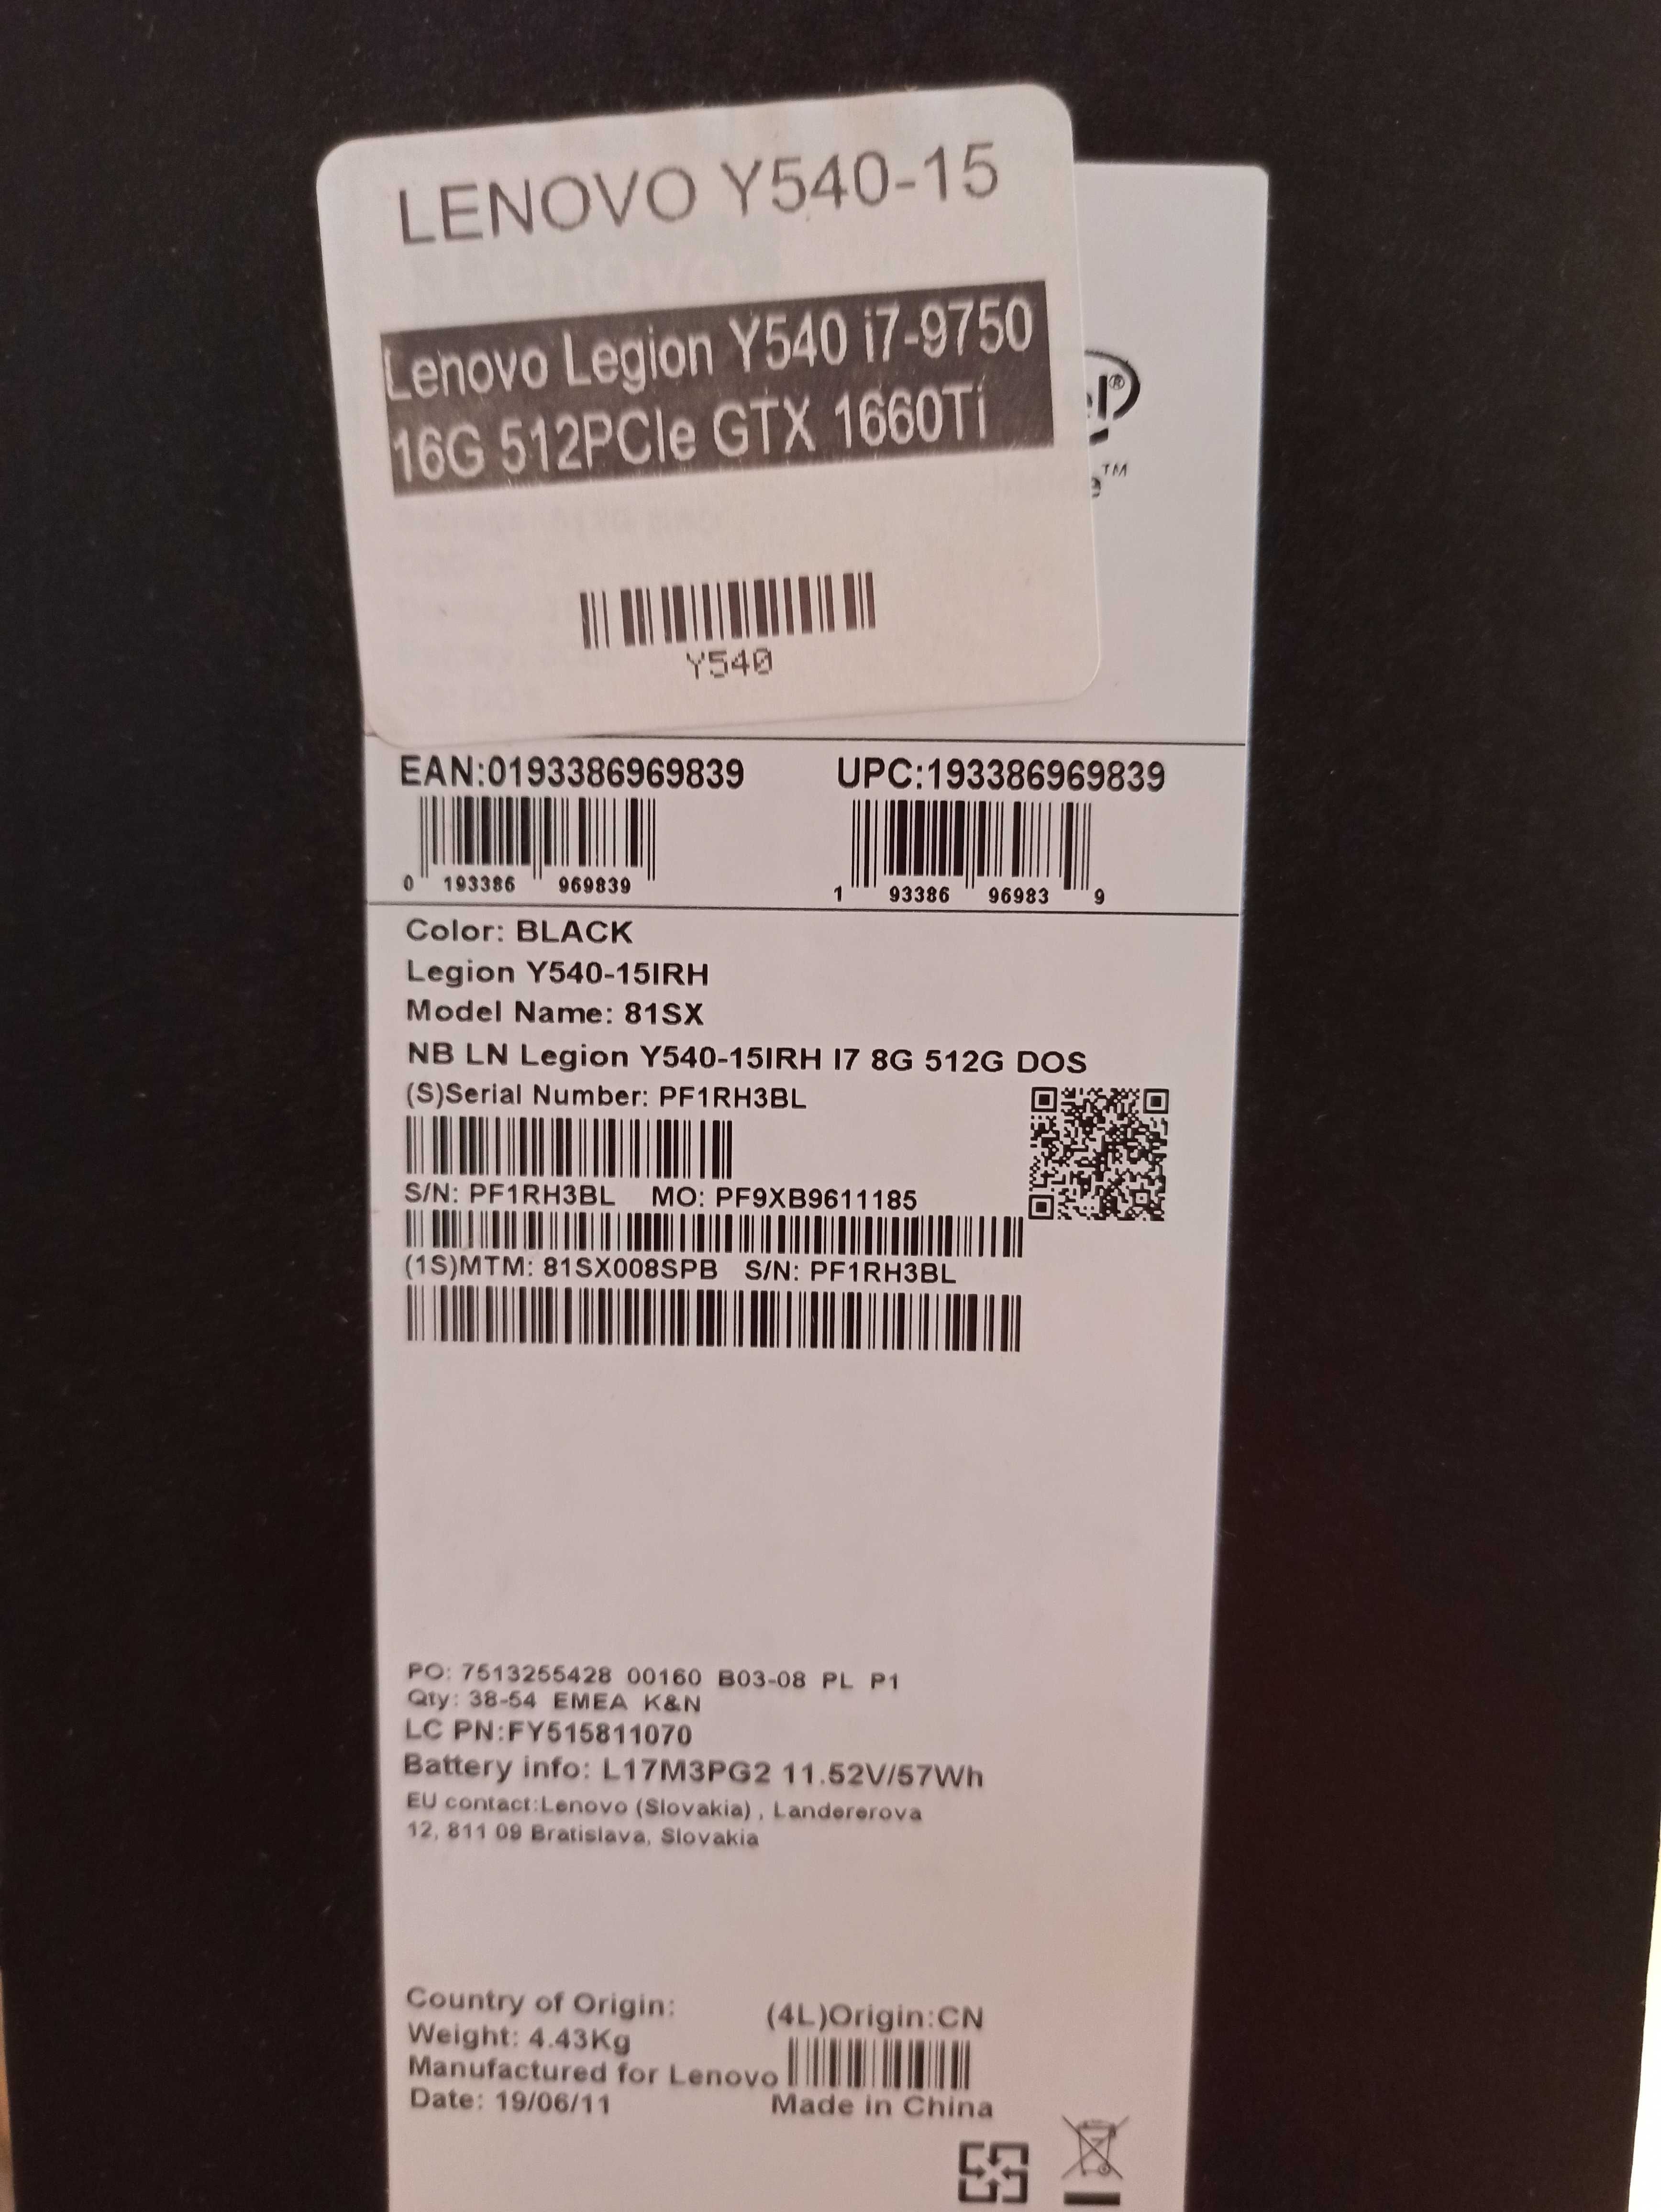 Lenovo Legion Y540-15 i7-9750H/16GB/512 GTX1660Ti